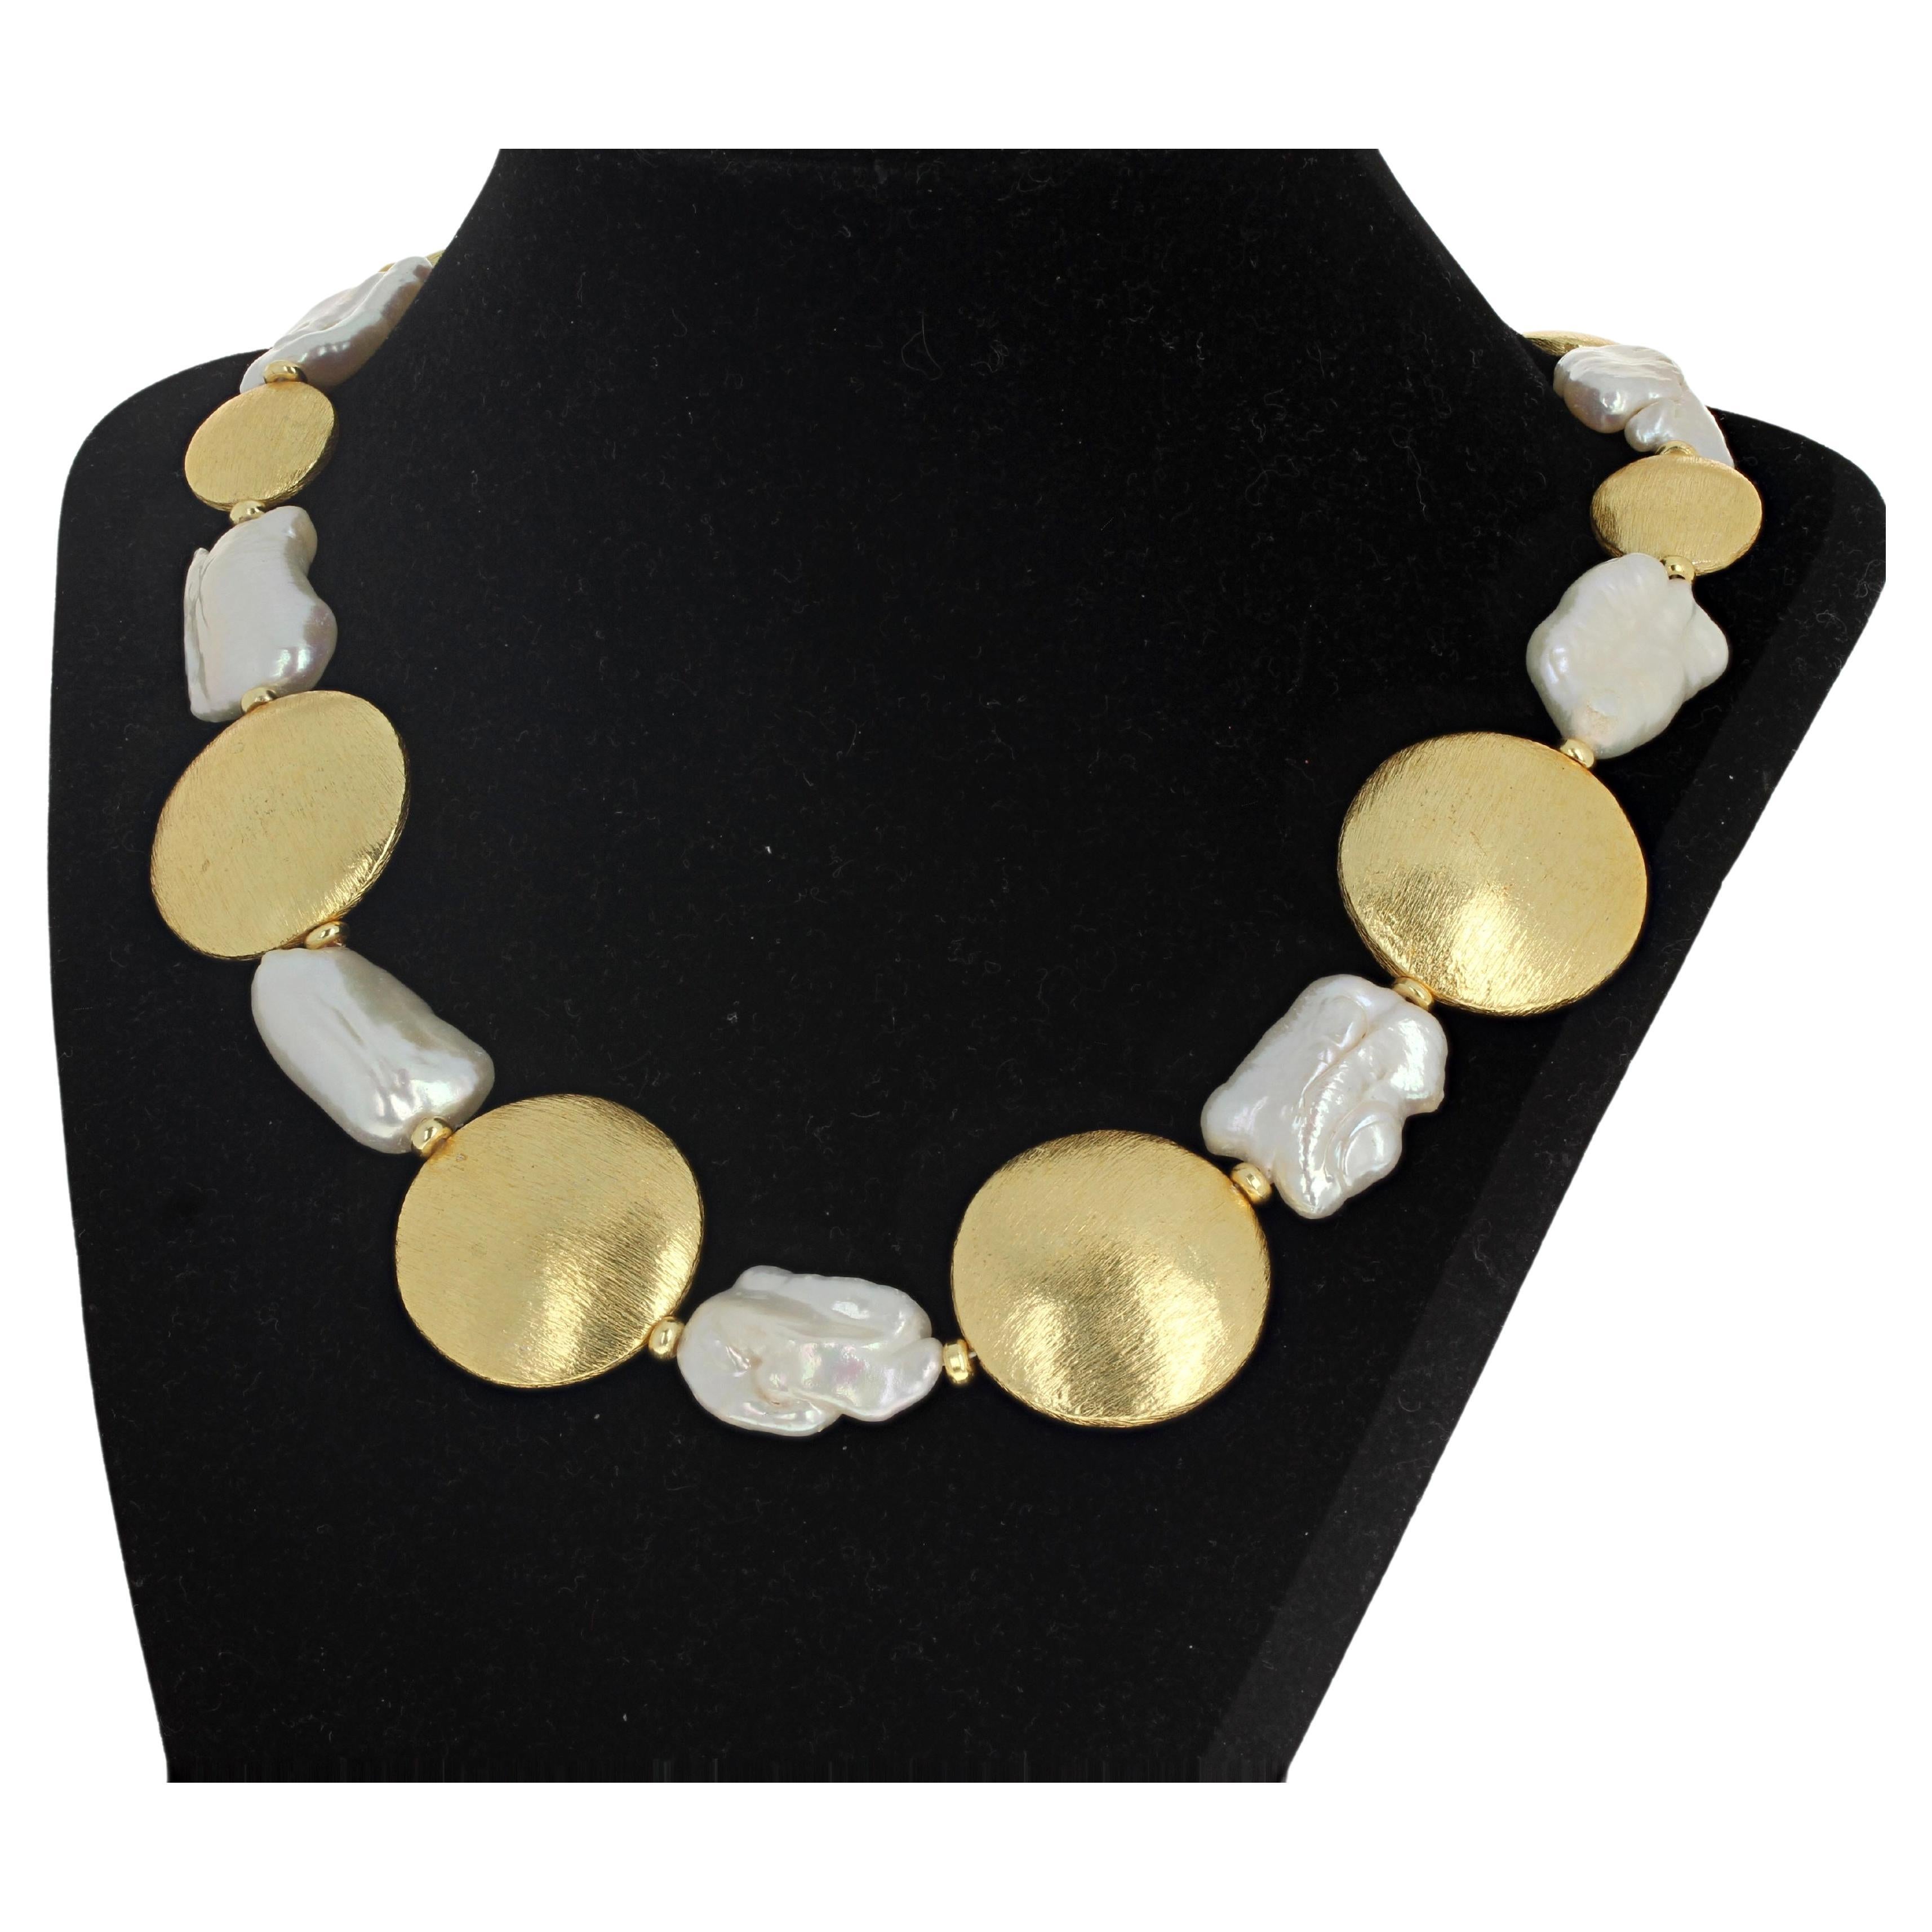 AJD Real Very White Natural Pearls & Goldy Rondels très élégant collier de 18 1/2"